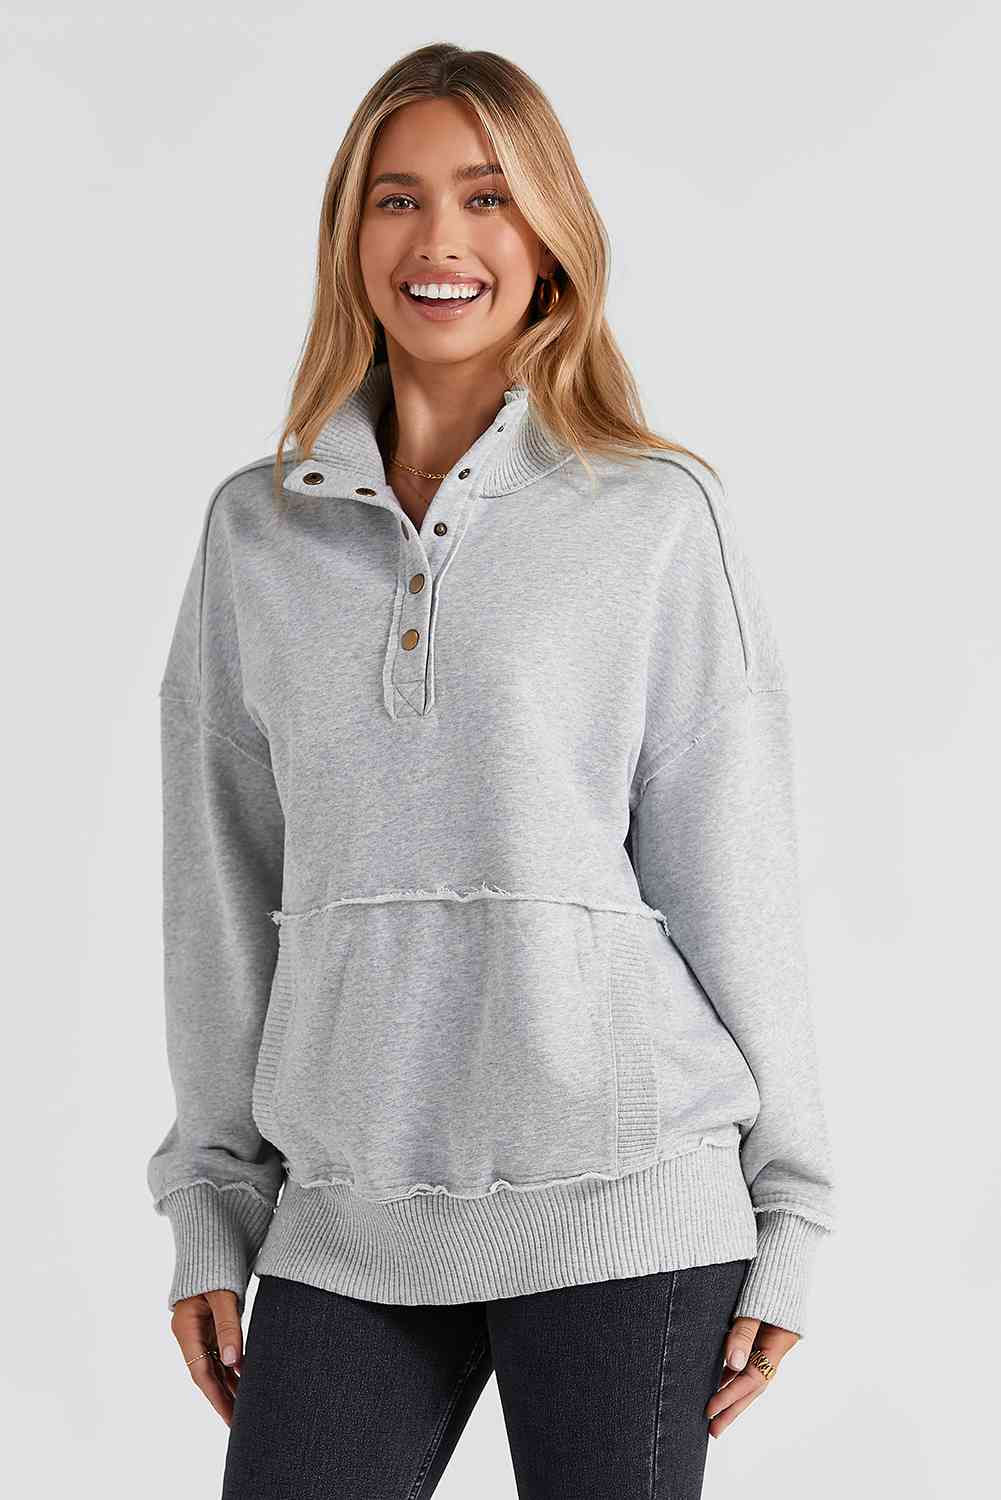 Half Sanp Drop Shoulder Long Sleeve Sweatshirt - GemThreads Boutique